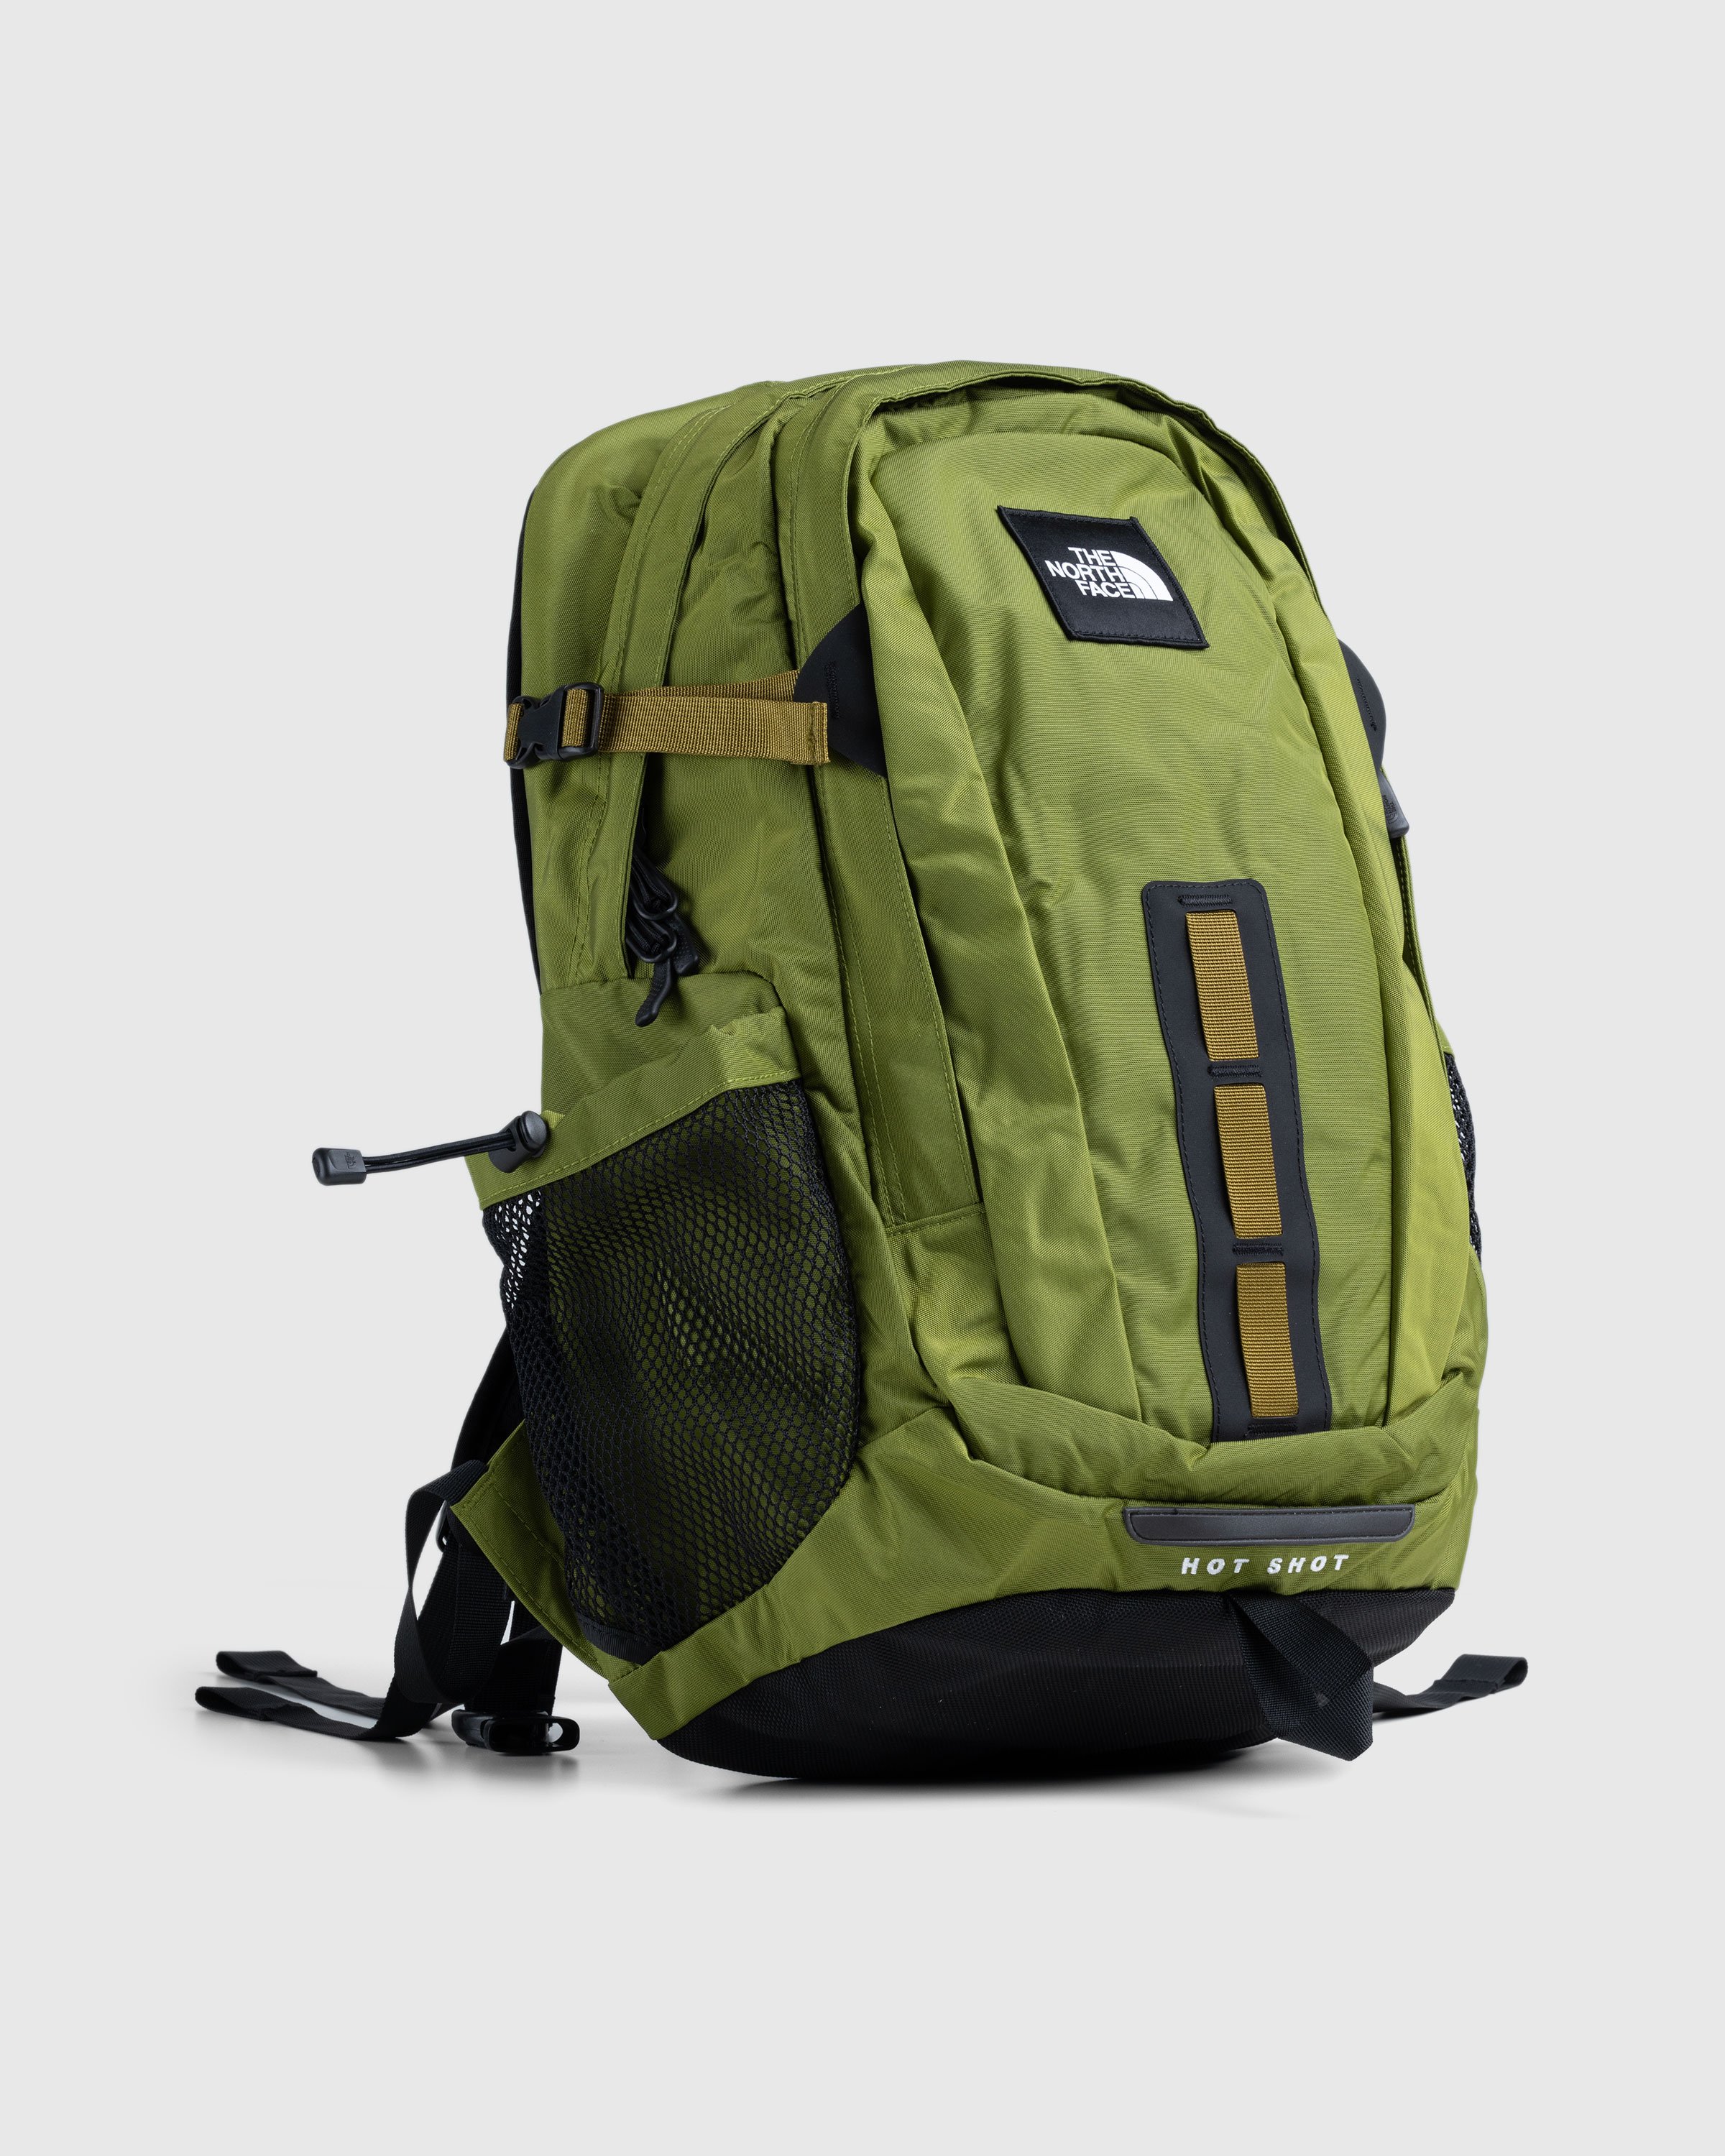 The North Face - Hot Shot Backpack Calla Green/Fir Green - Accessories - Green - Image 3